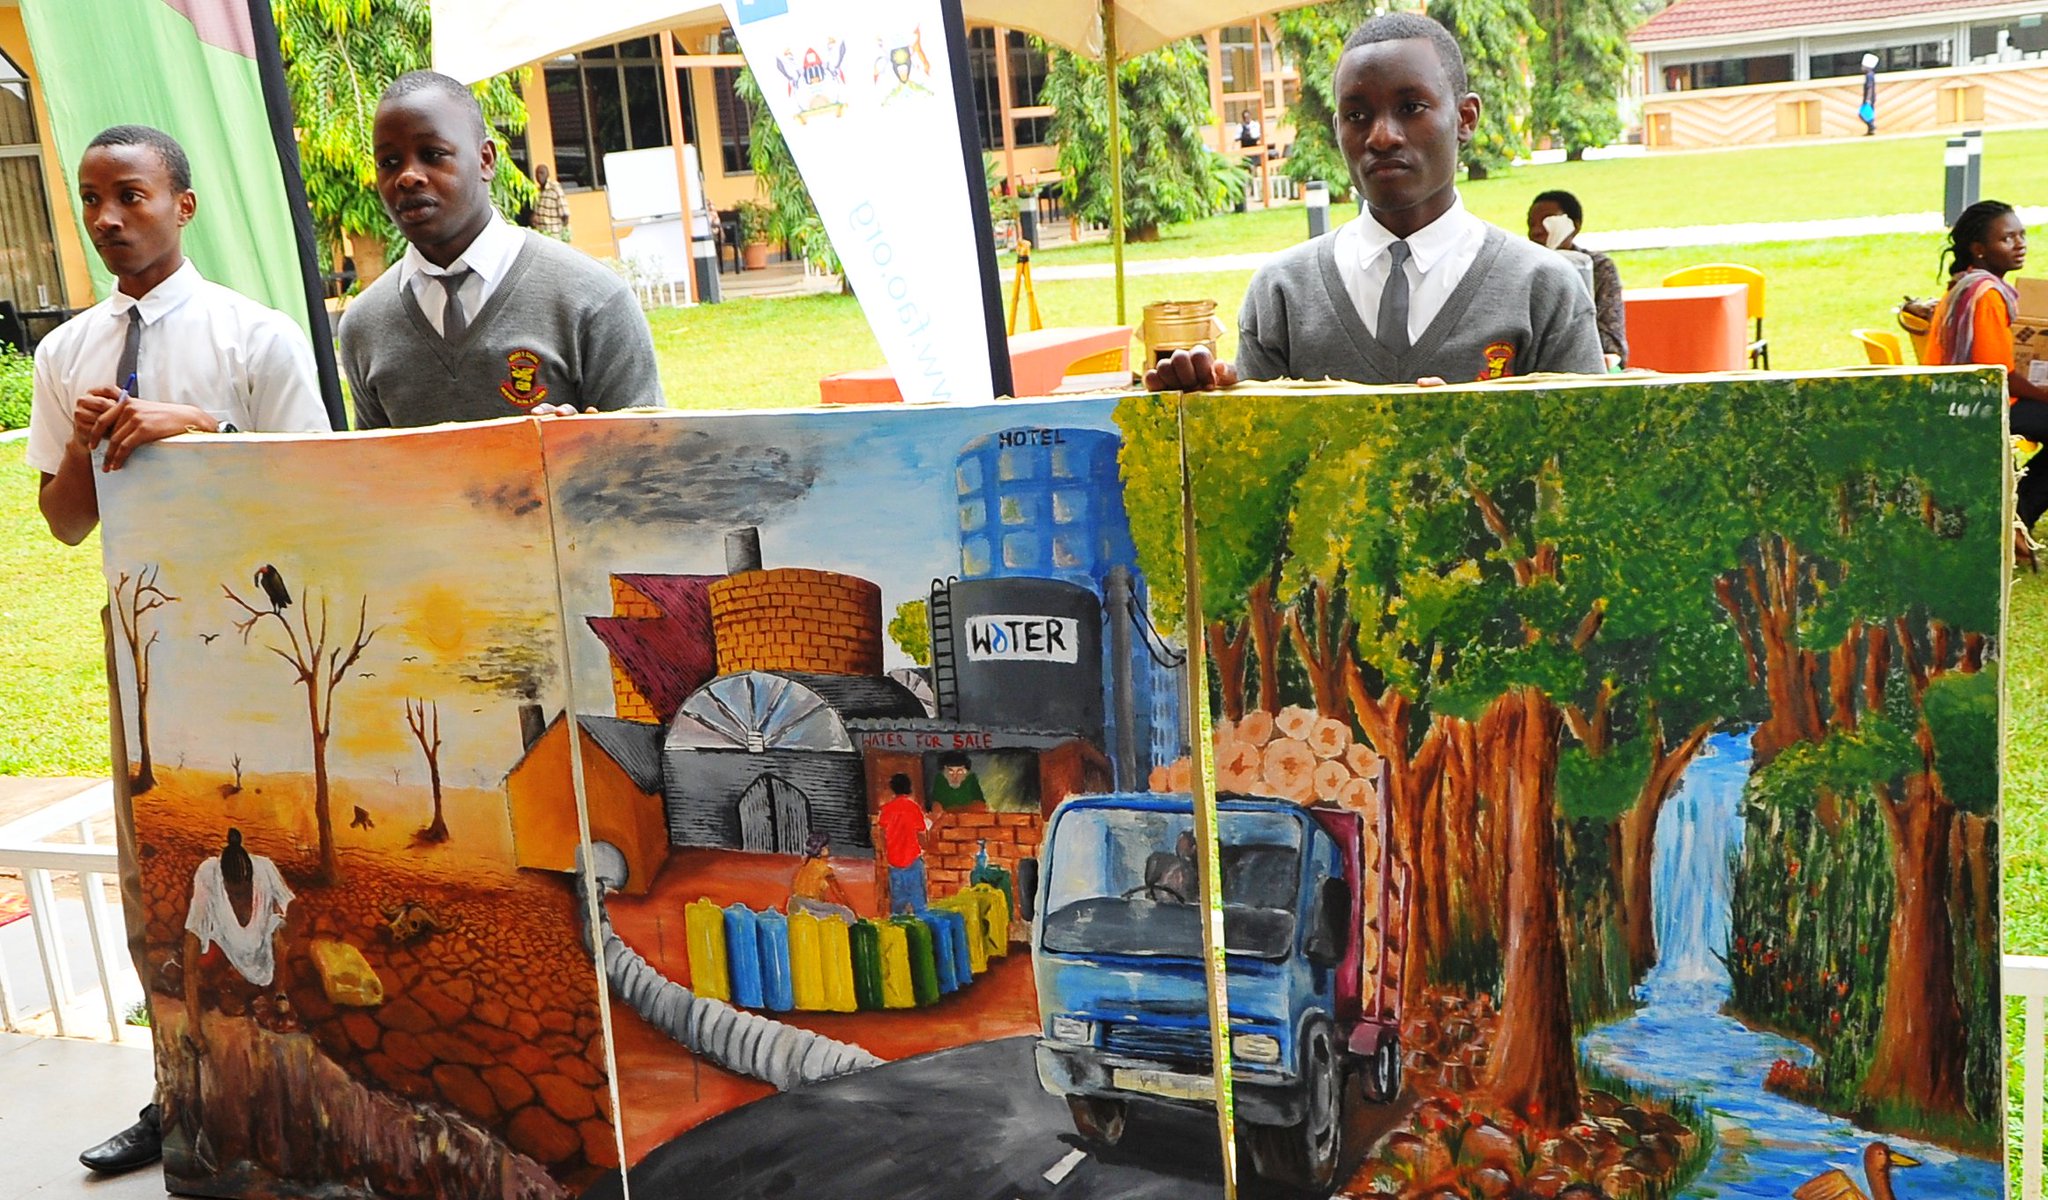 Students at #CBA11 use art to raise awareness about #climatechange @FAOAfrica @IIED @UNDPUganda @MakerereU https://t.co/gxegIxVWIO